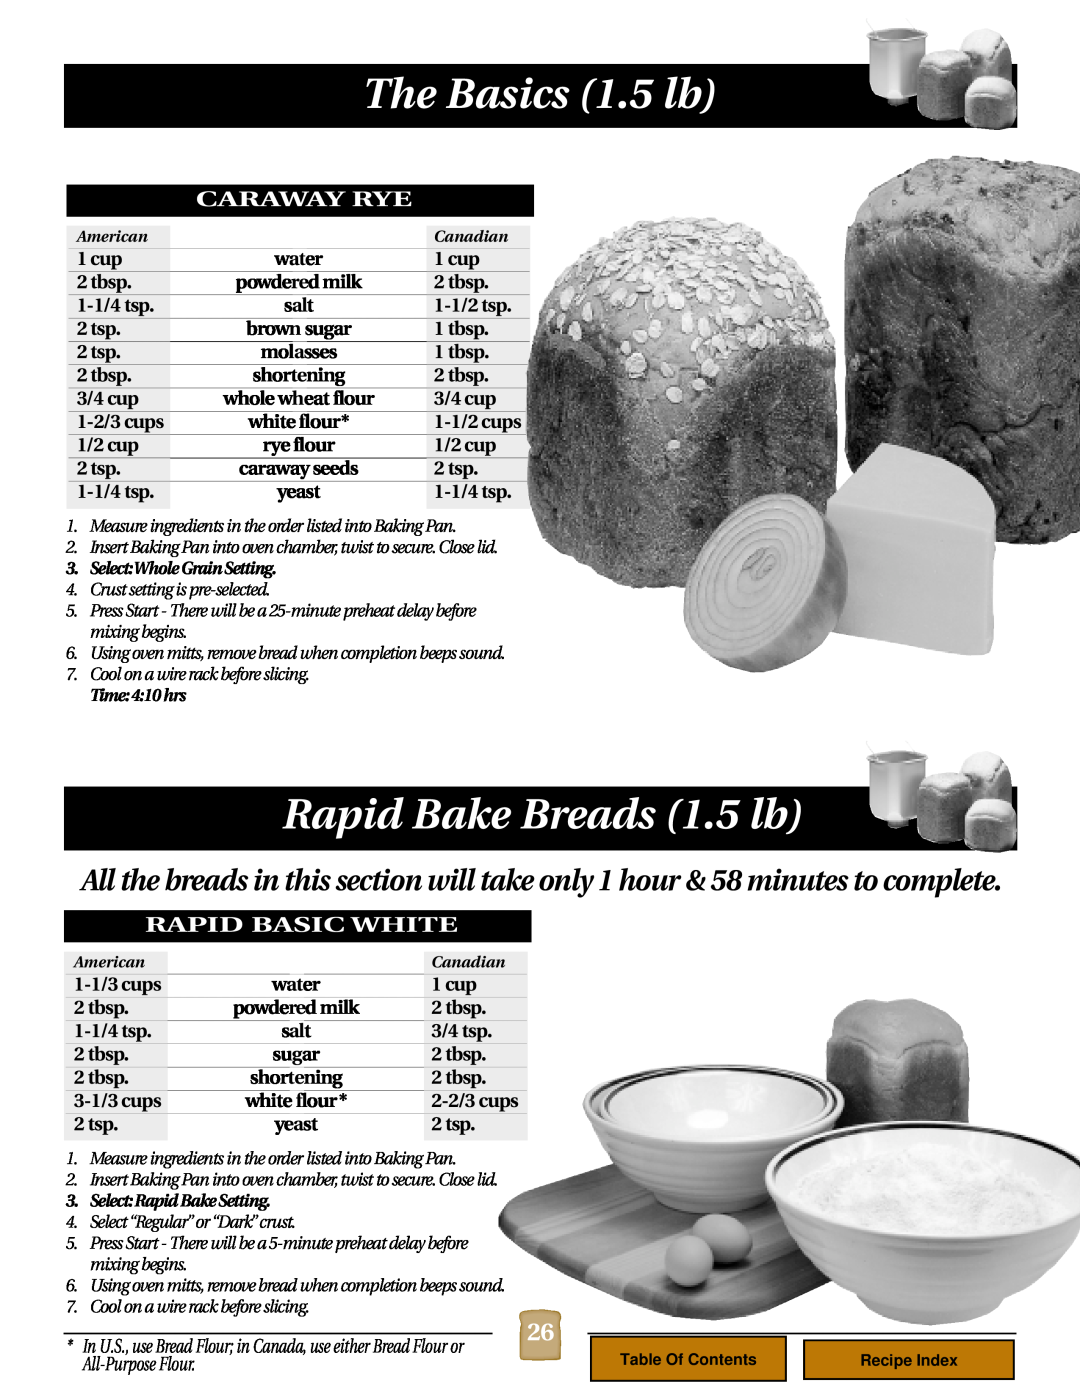 Black & Decker B1620 operating instructions Rapid Bake Breads 1.5 lb, The Basics 1.5 lb, Caraway Rye, Rapid Basic White 